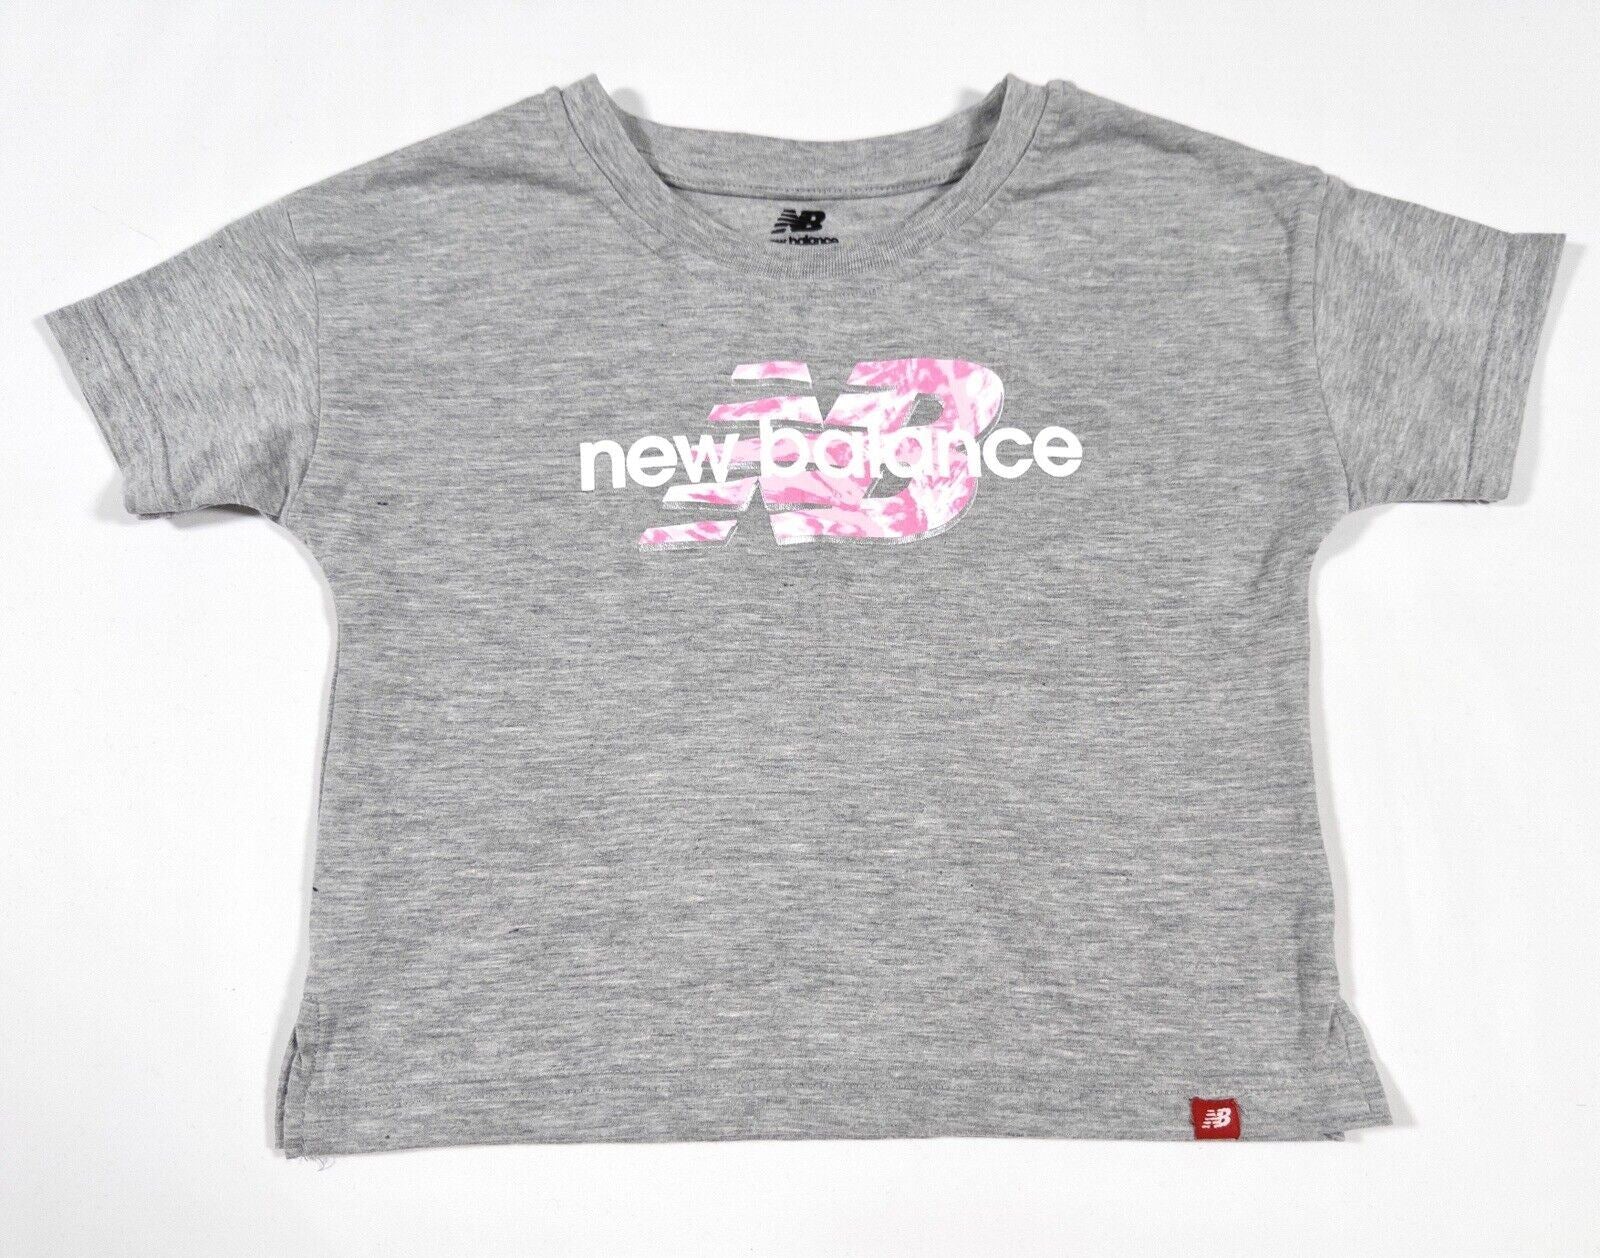 NEW BALANCE Kids Girls Grey T-shirt Top Size UK 4 T